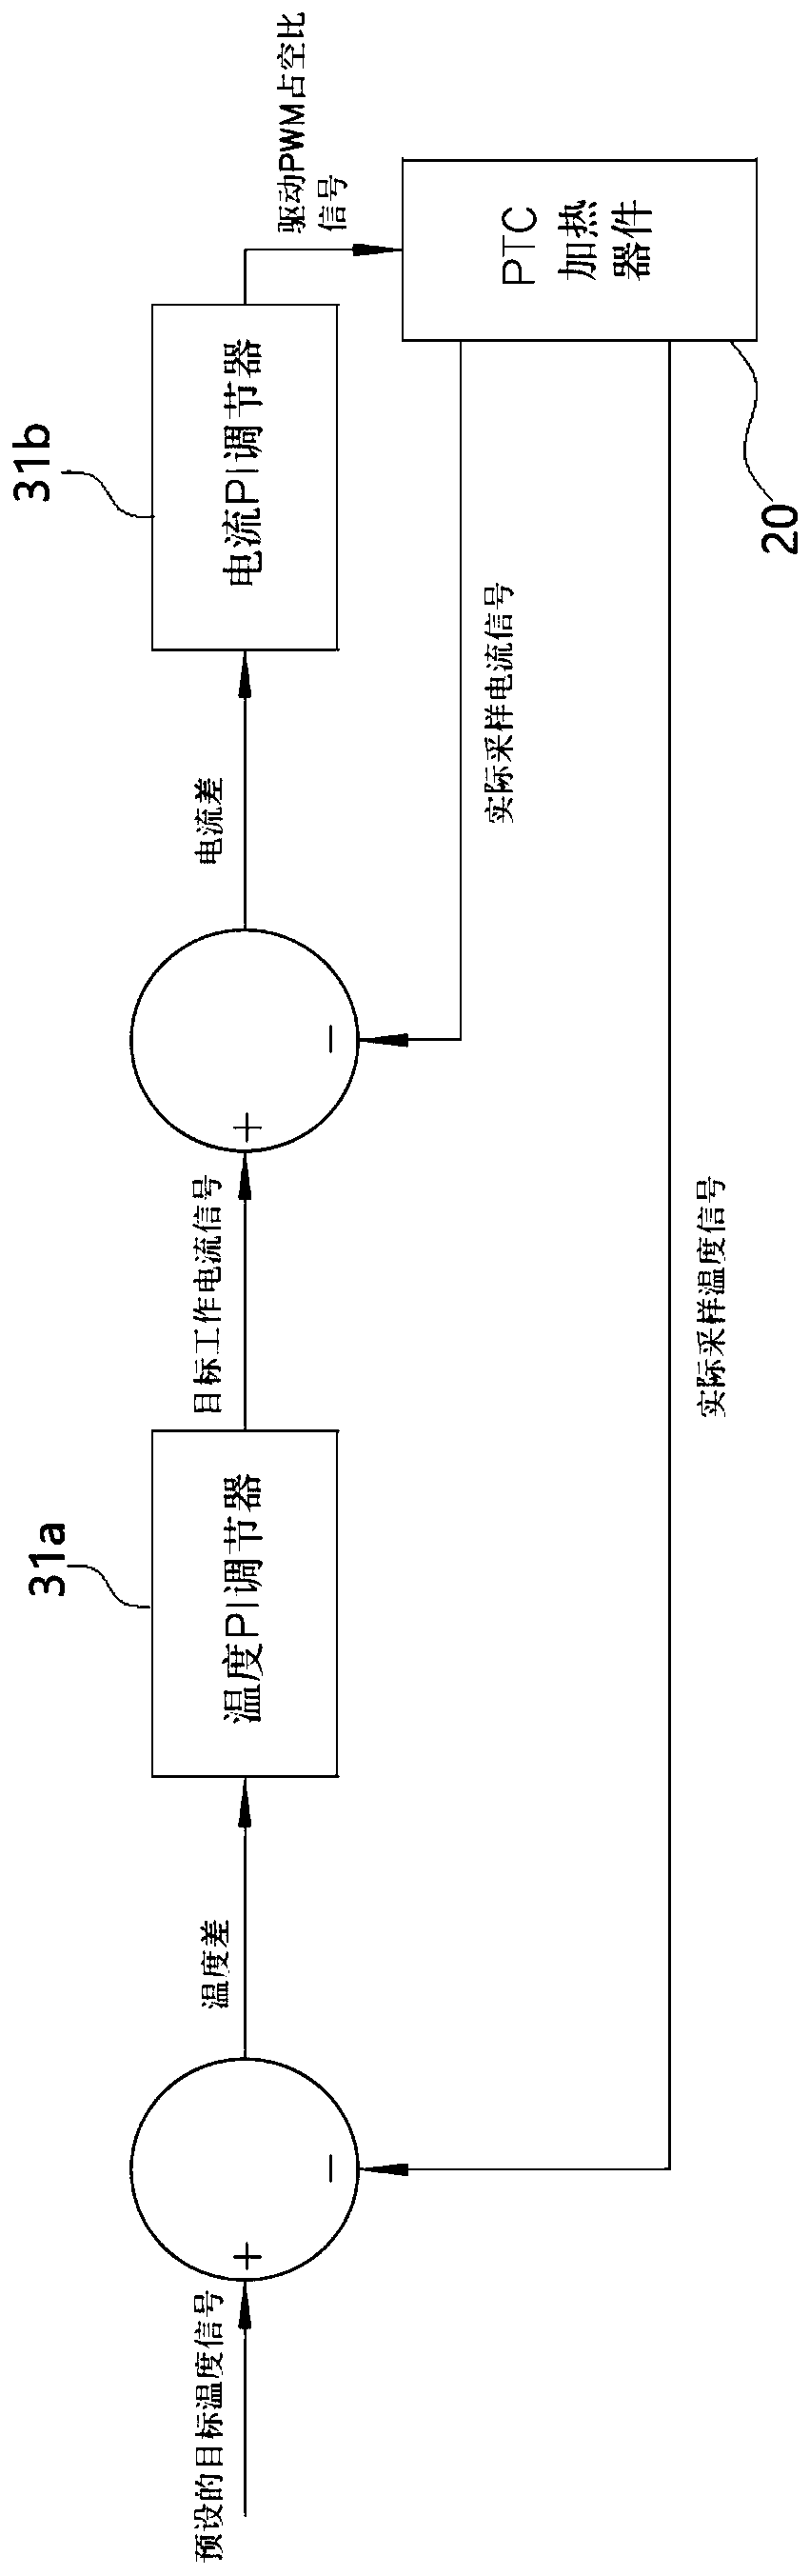 Control method for multi-branch PTC heater